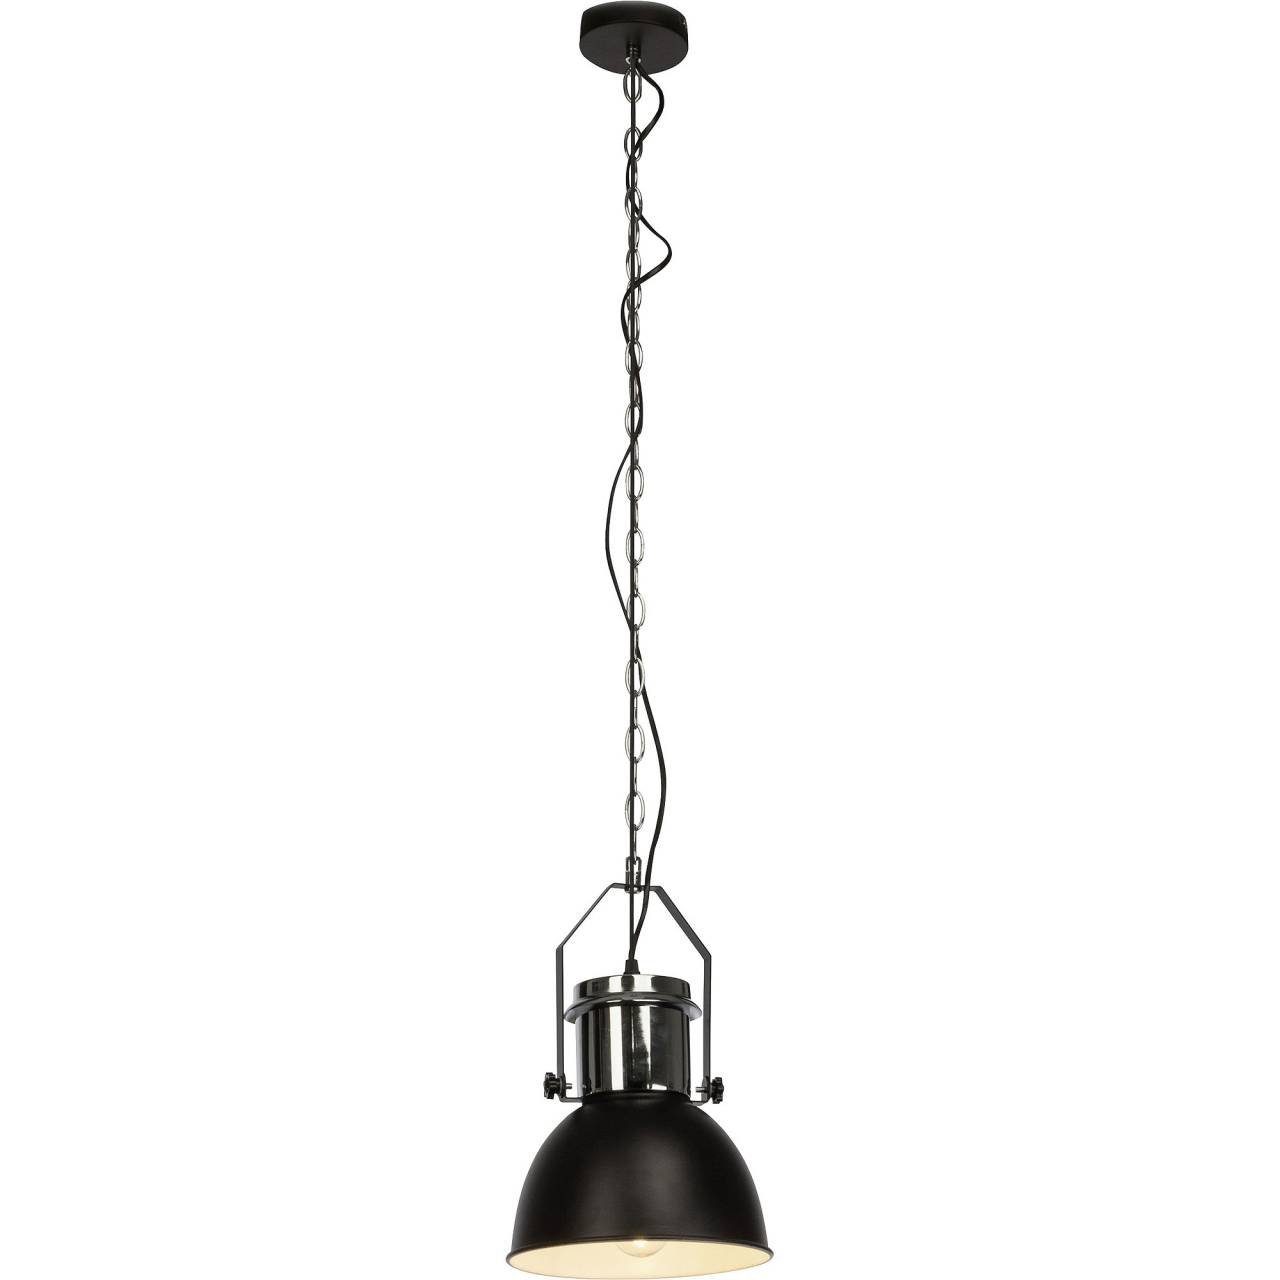 Brilliant Pendelleuchte Salford, Lampe Salford E27, Pendelleuchte schwarz/chrom A60, 1x gee 60W, 23cm